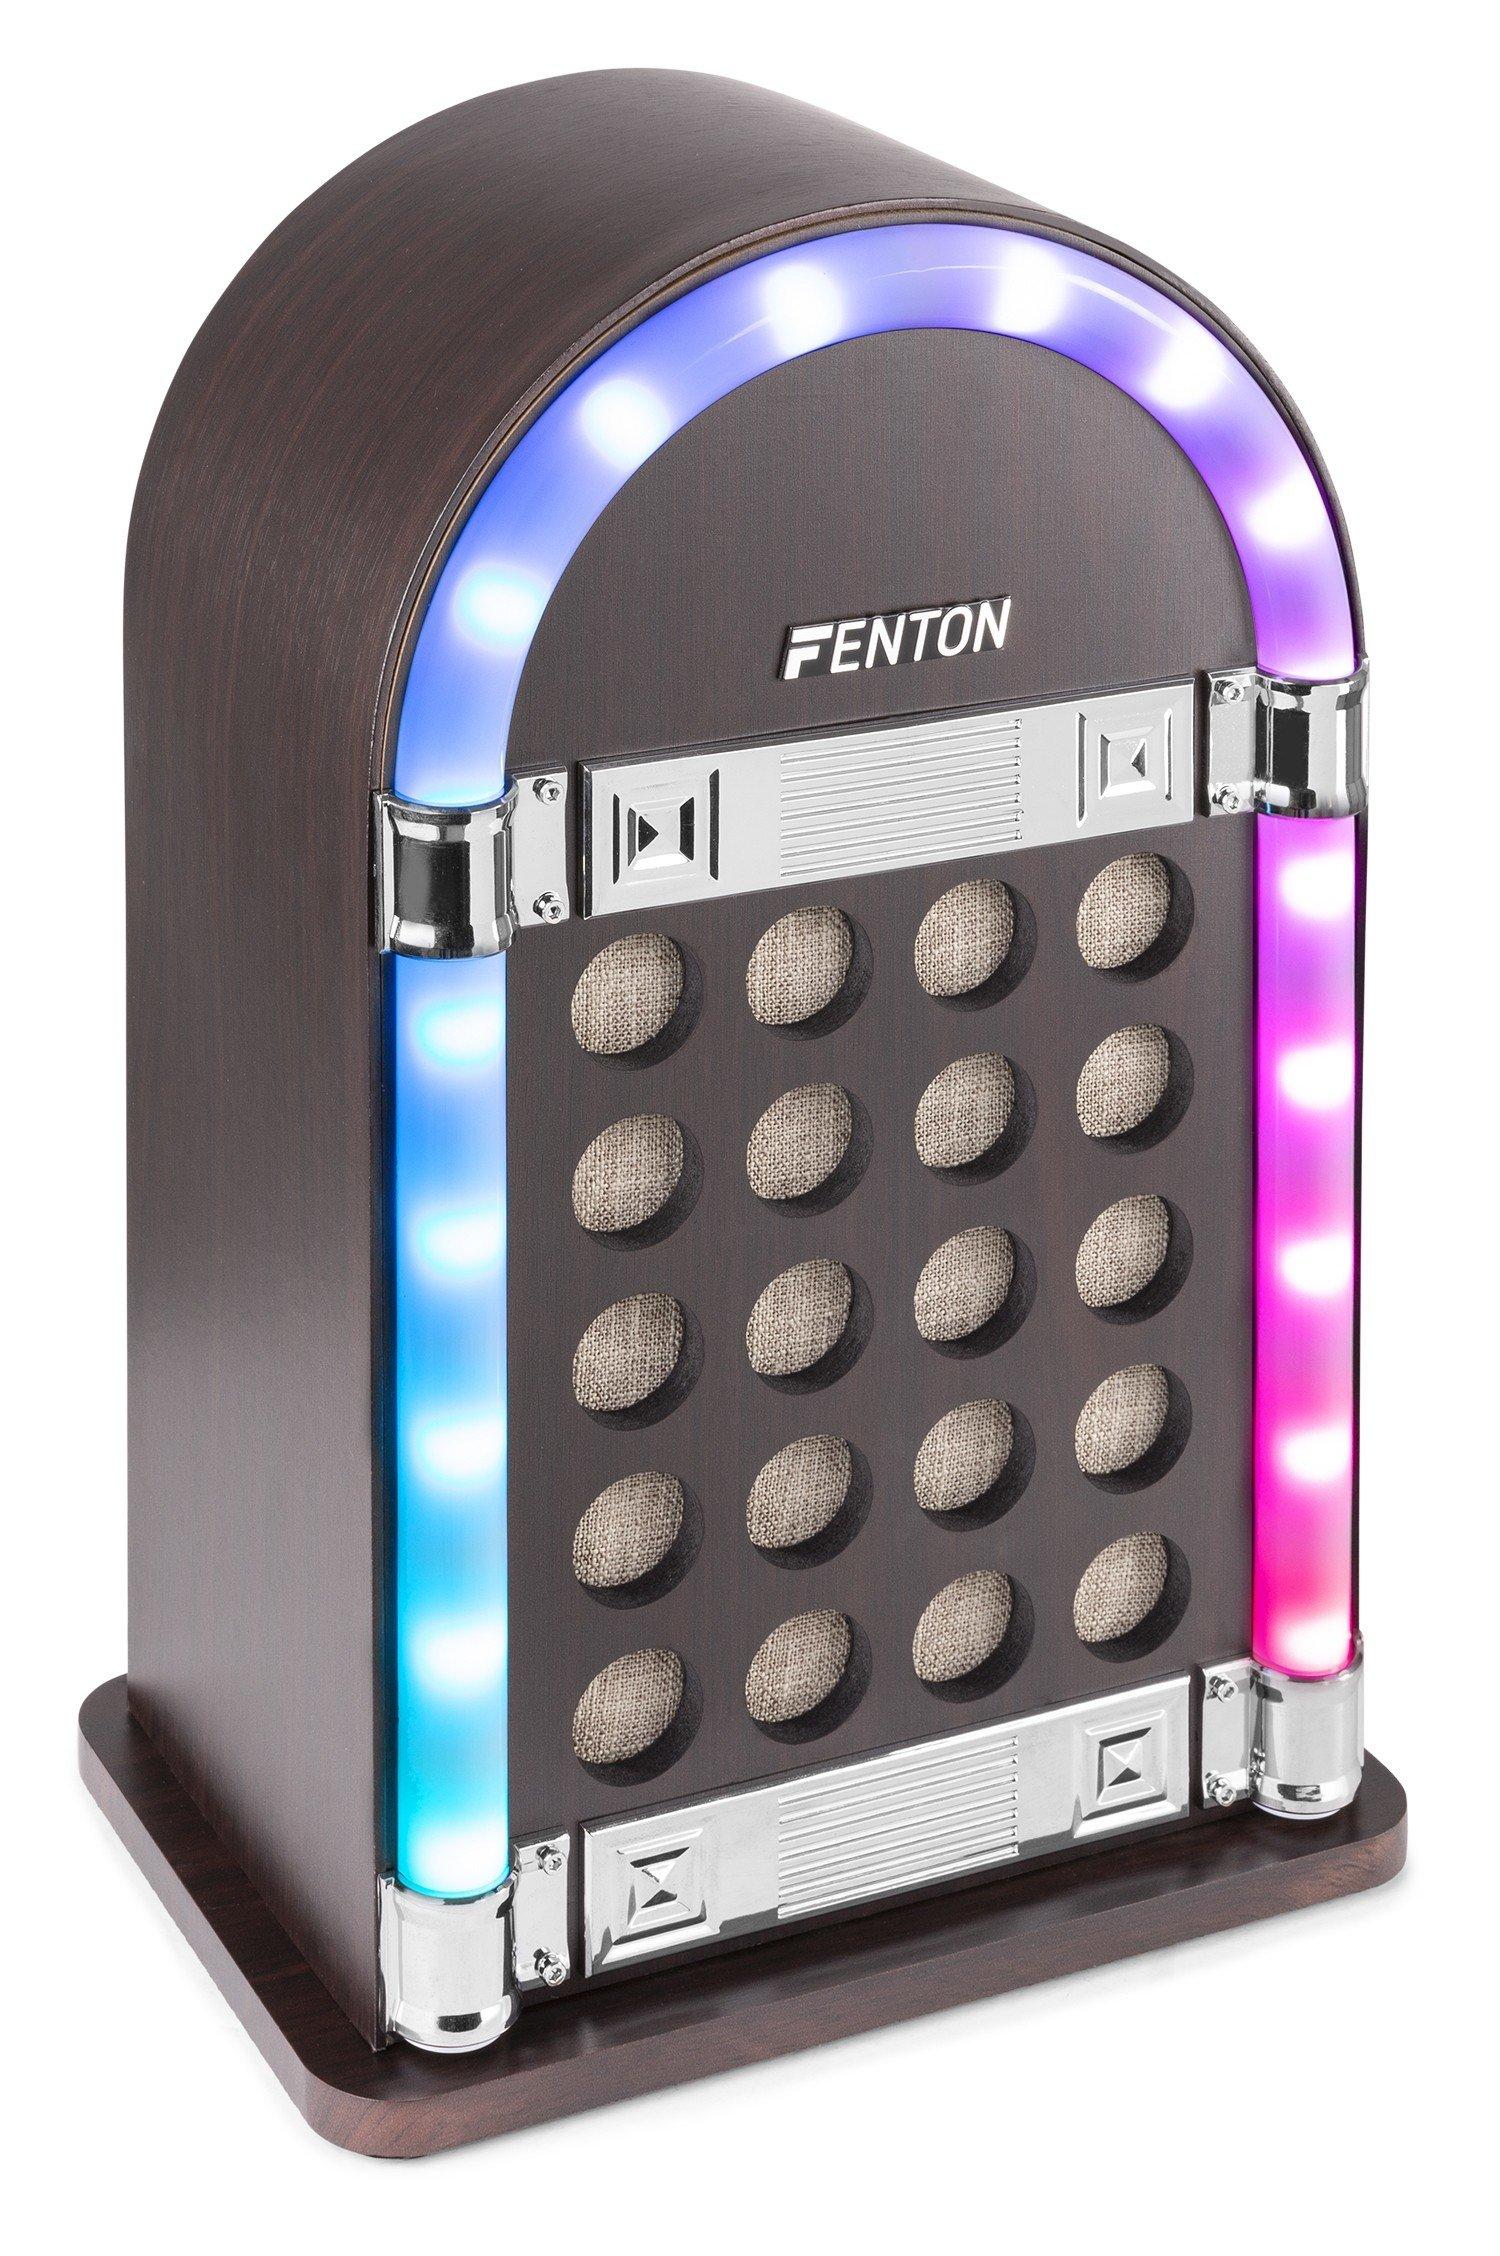 Fenton  Fenton JKB40 Enceinte portable stéréo Multicolore, Bois 30 W 